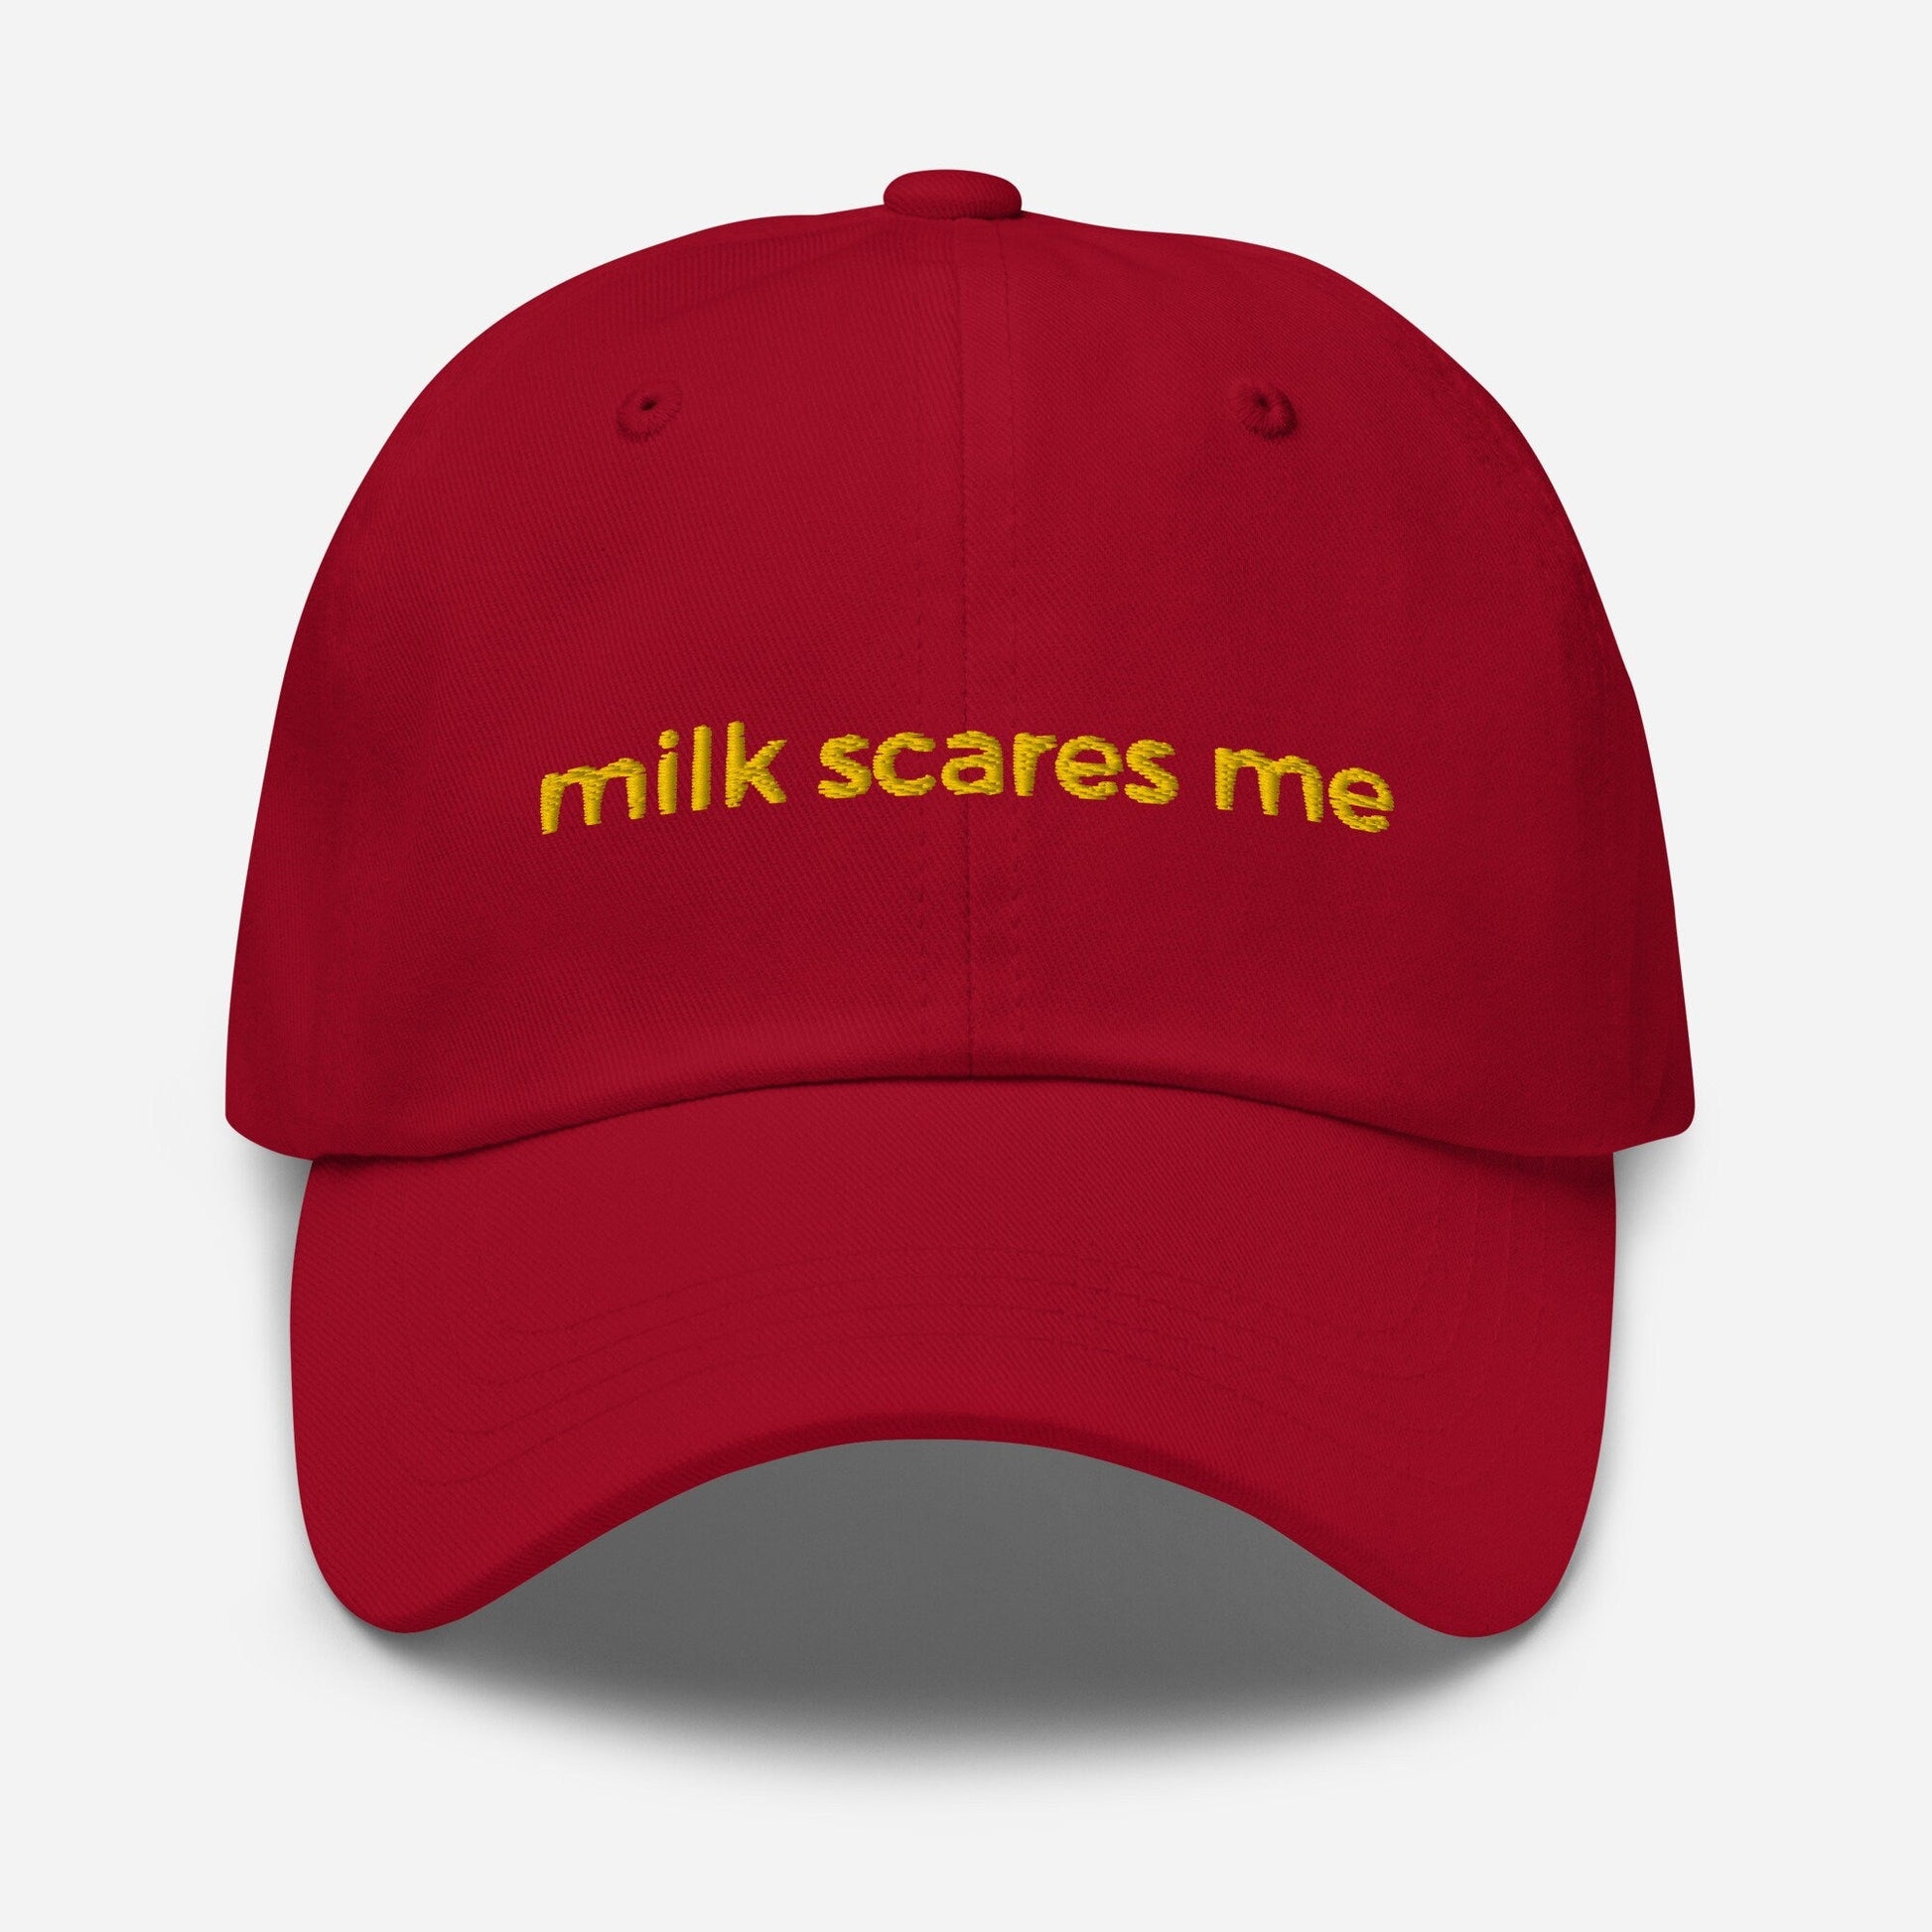 Dairy Free Dad Hat - Gift for Lactose Intolerant, Upset Stomach Survivors - 100% Vegan Embroidered Cotton Cap - Evilwater Originals